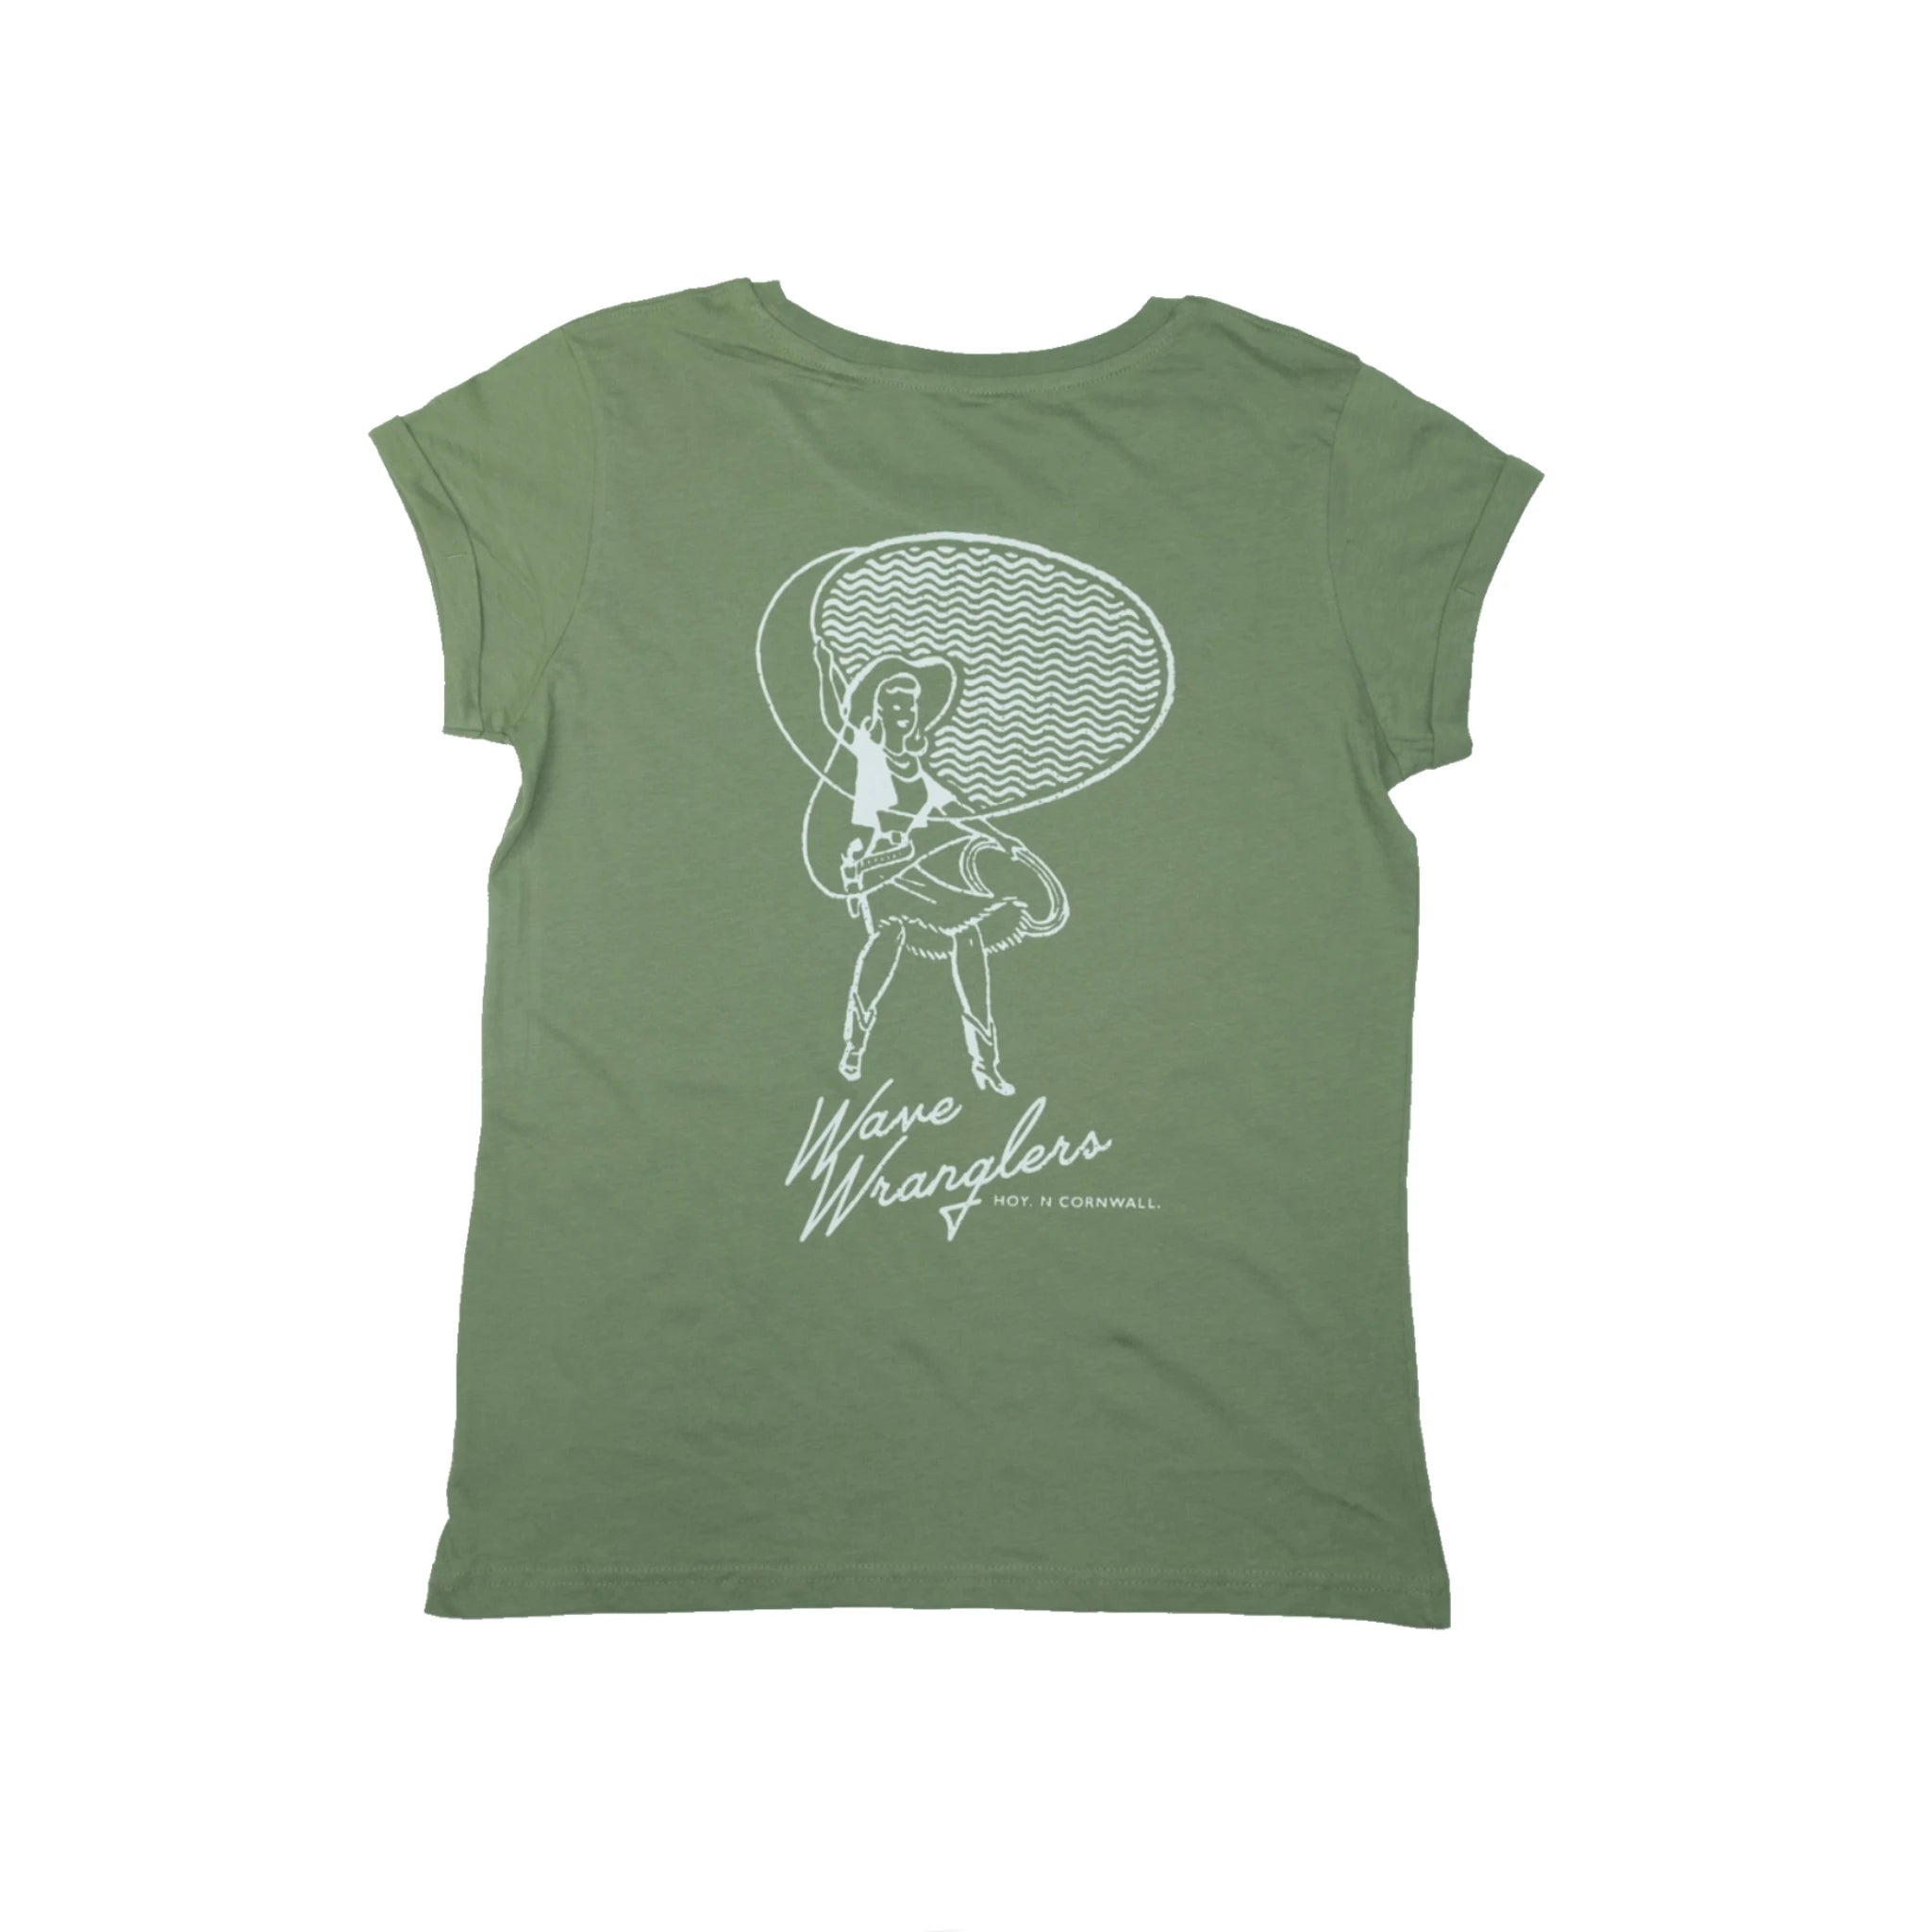 Women's Hoy Wave Wranglers Organic T-shirt - Soft Green